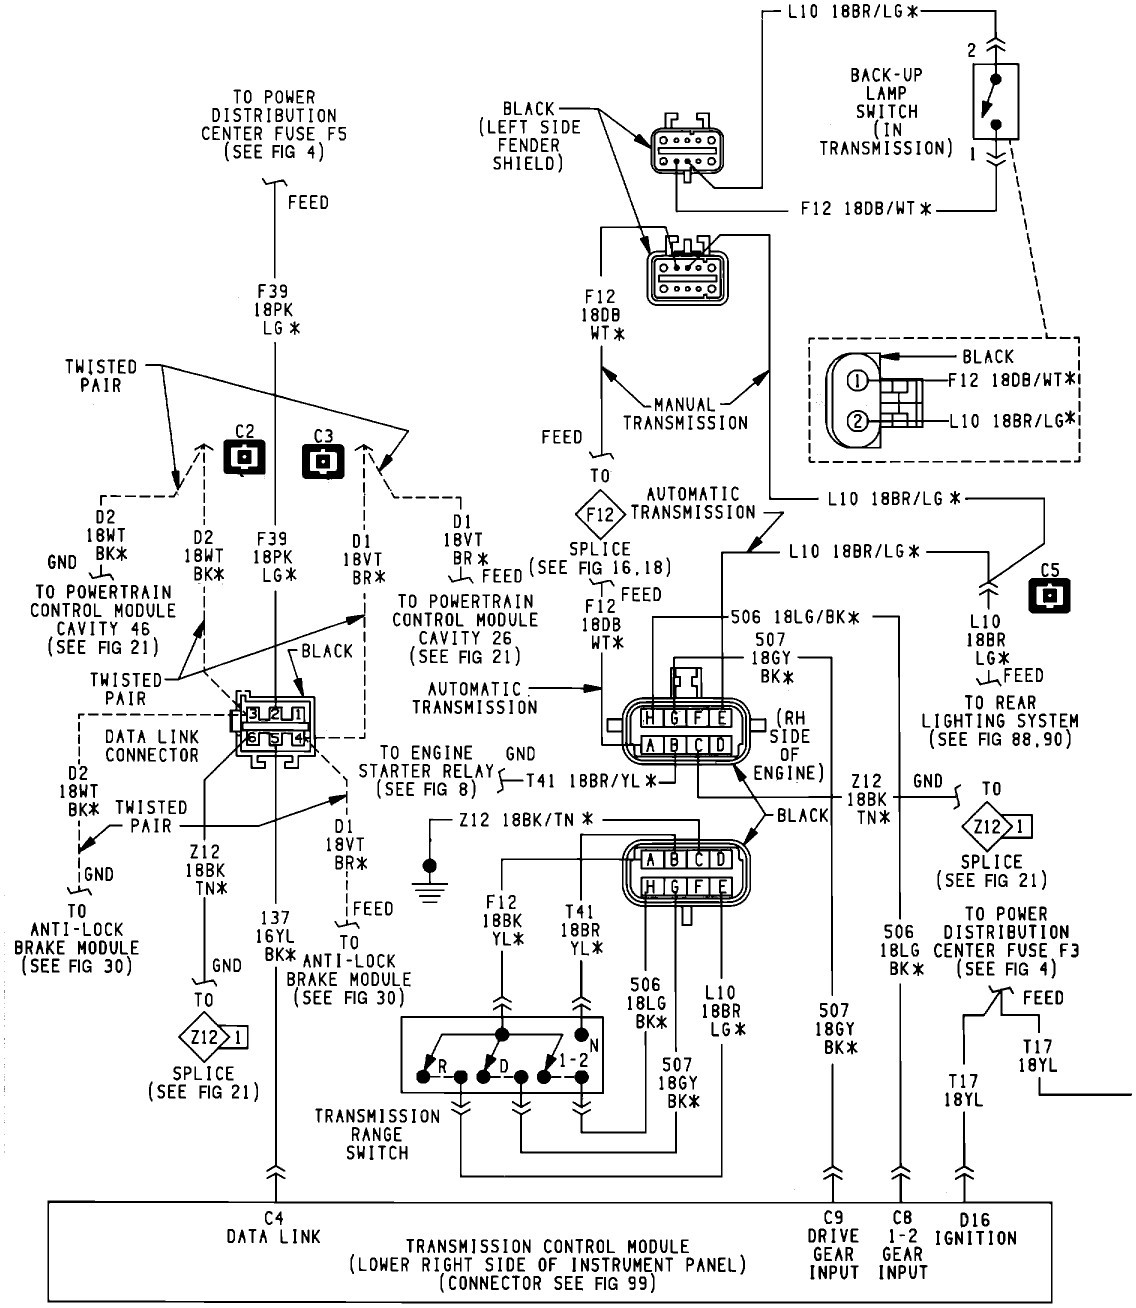 Jeep Grand Cherokee Engine Diagram Wiring Diagram Operations 99 Jeep Cherokee Speaker Wiring Diagram 99 Jeep Cherokee Electrical Schematics